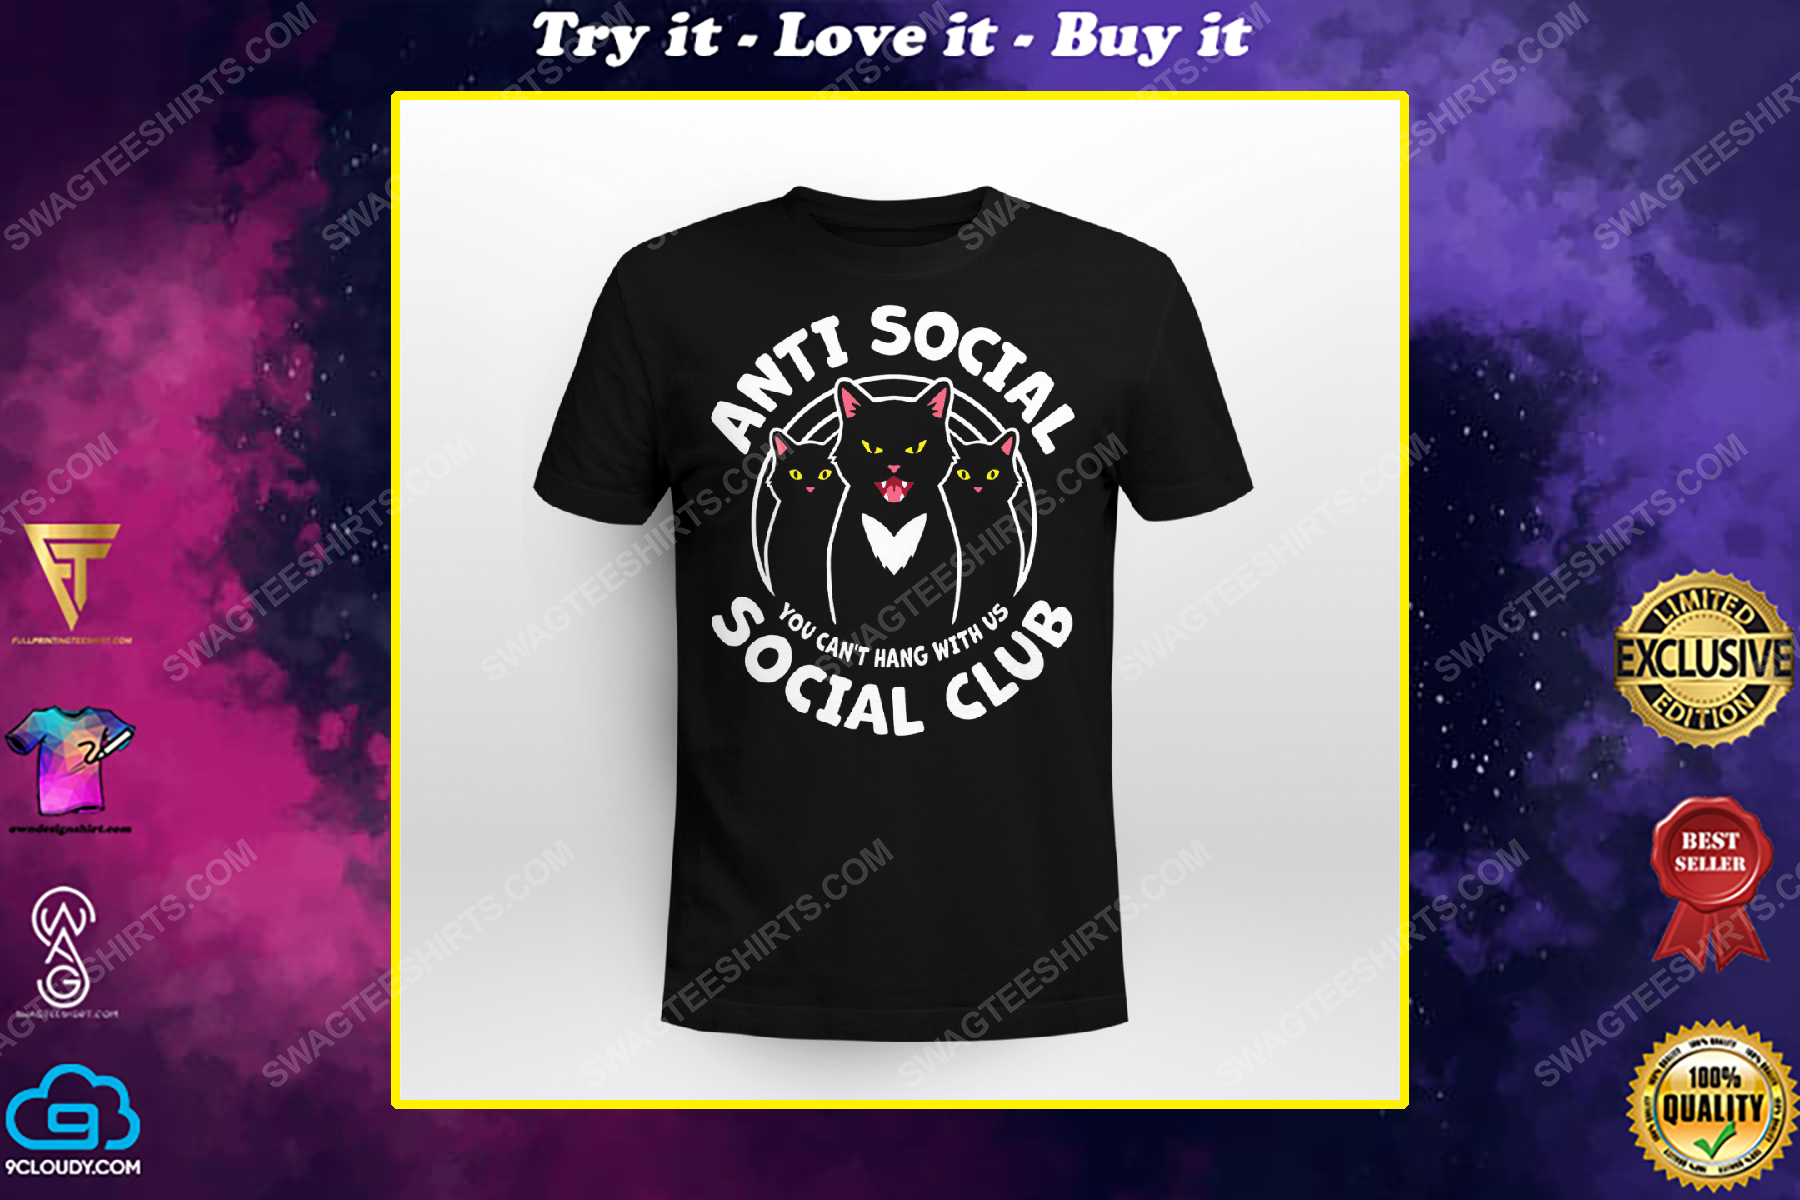 Black cat anti social social club you can't hang with us shirt